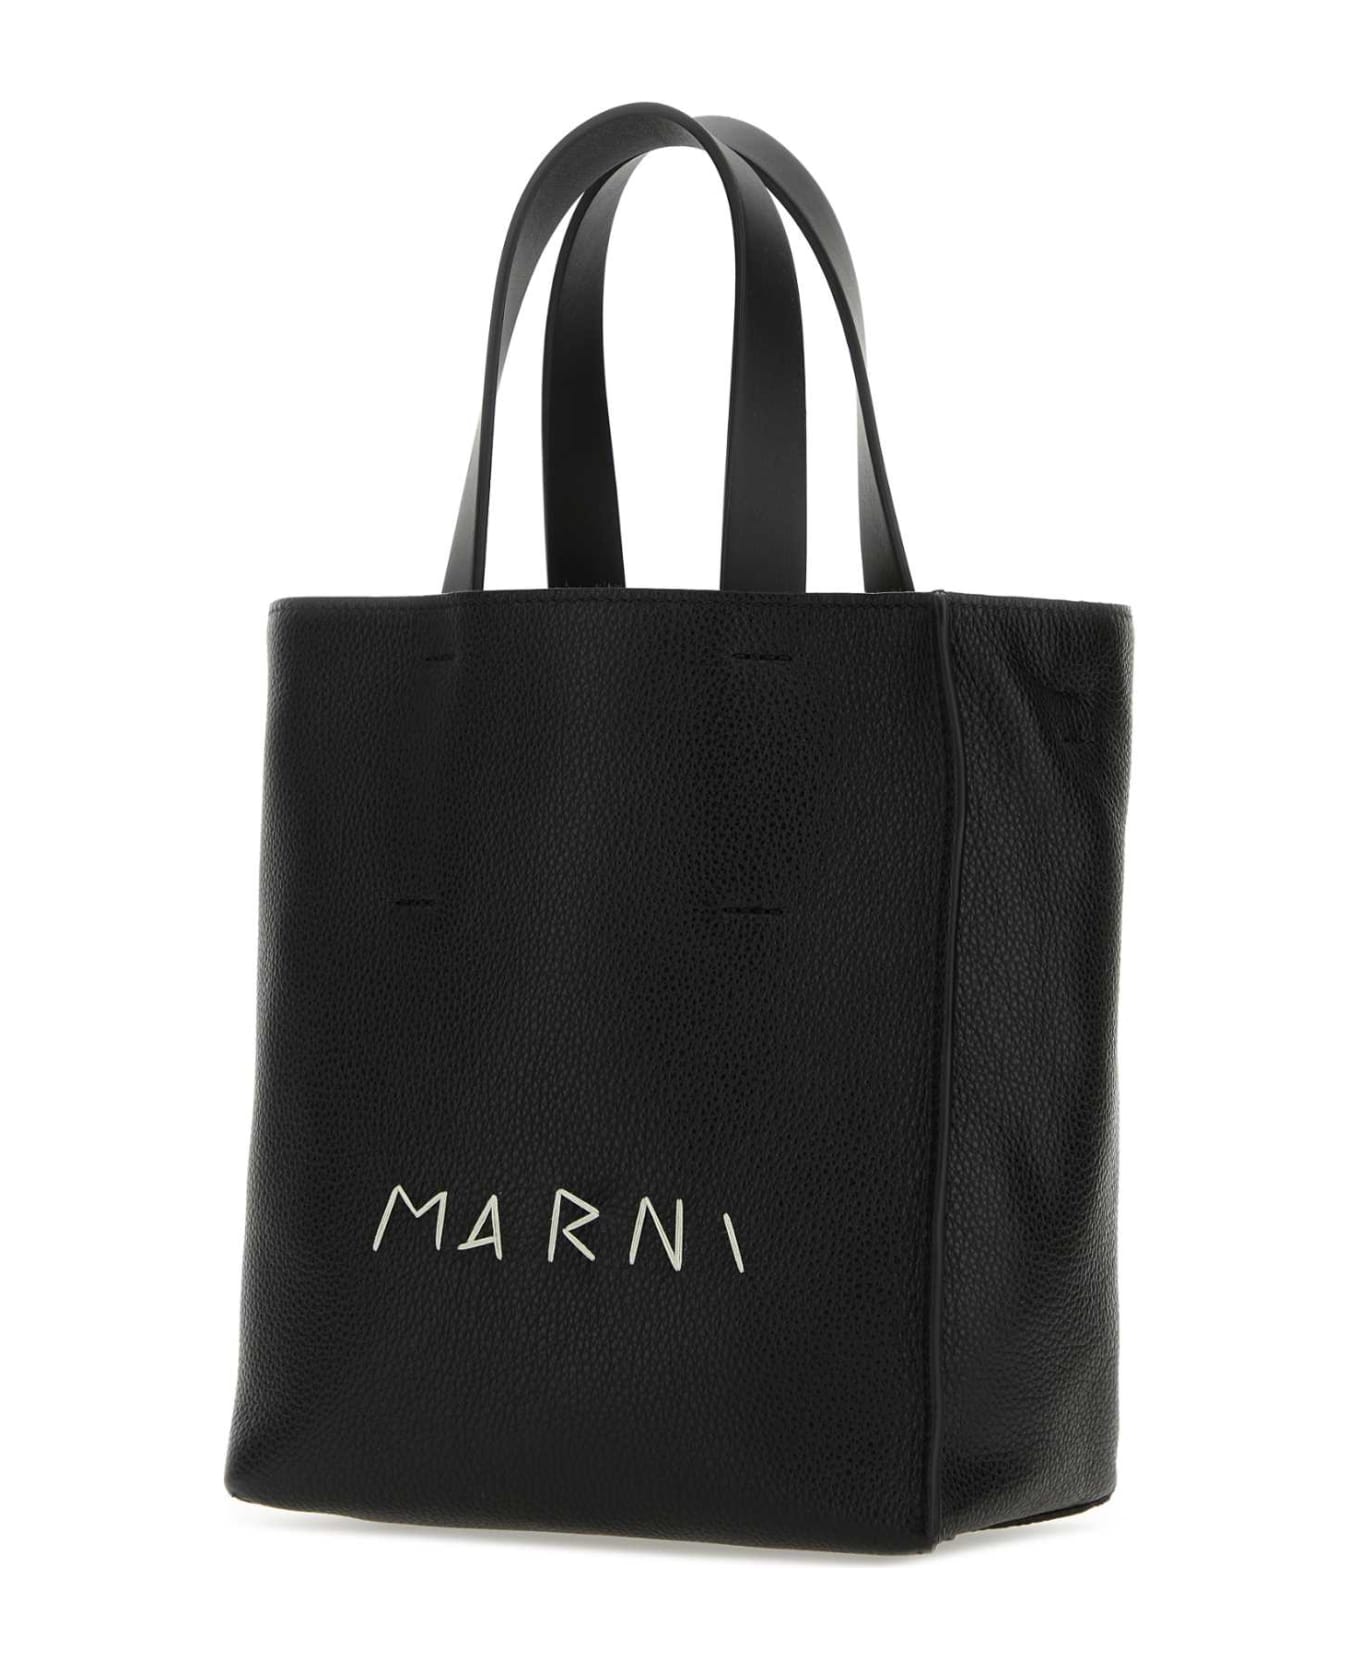 Marni Black Leather Mini Museo Handbag - 00N99 バッグ